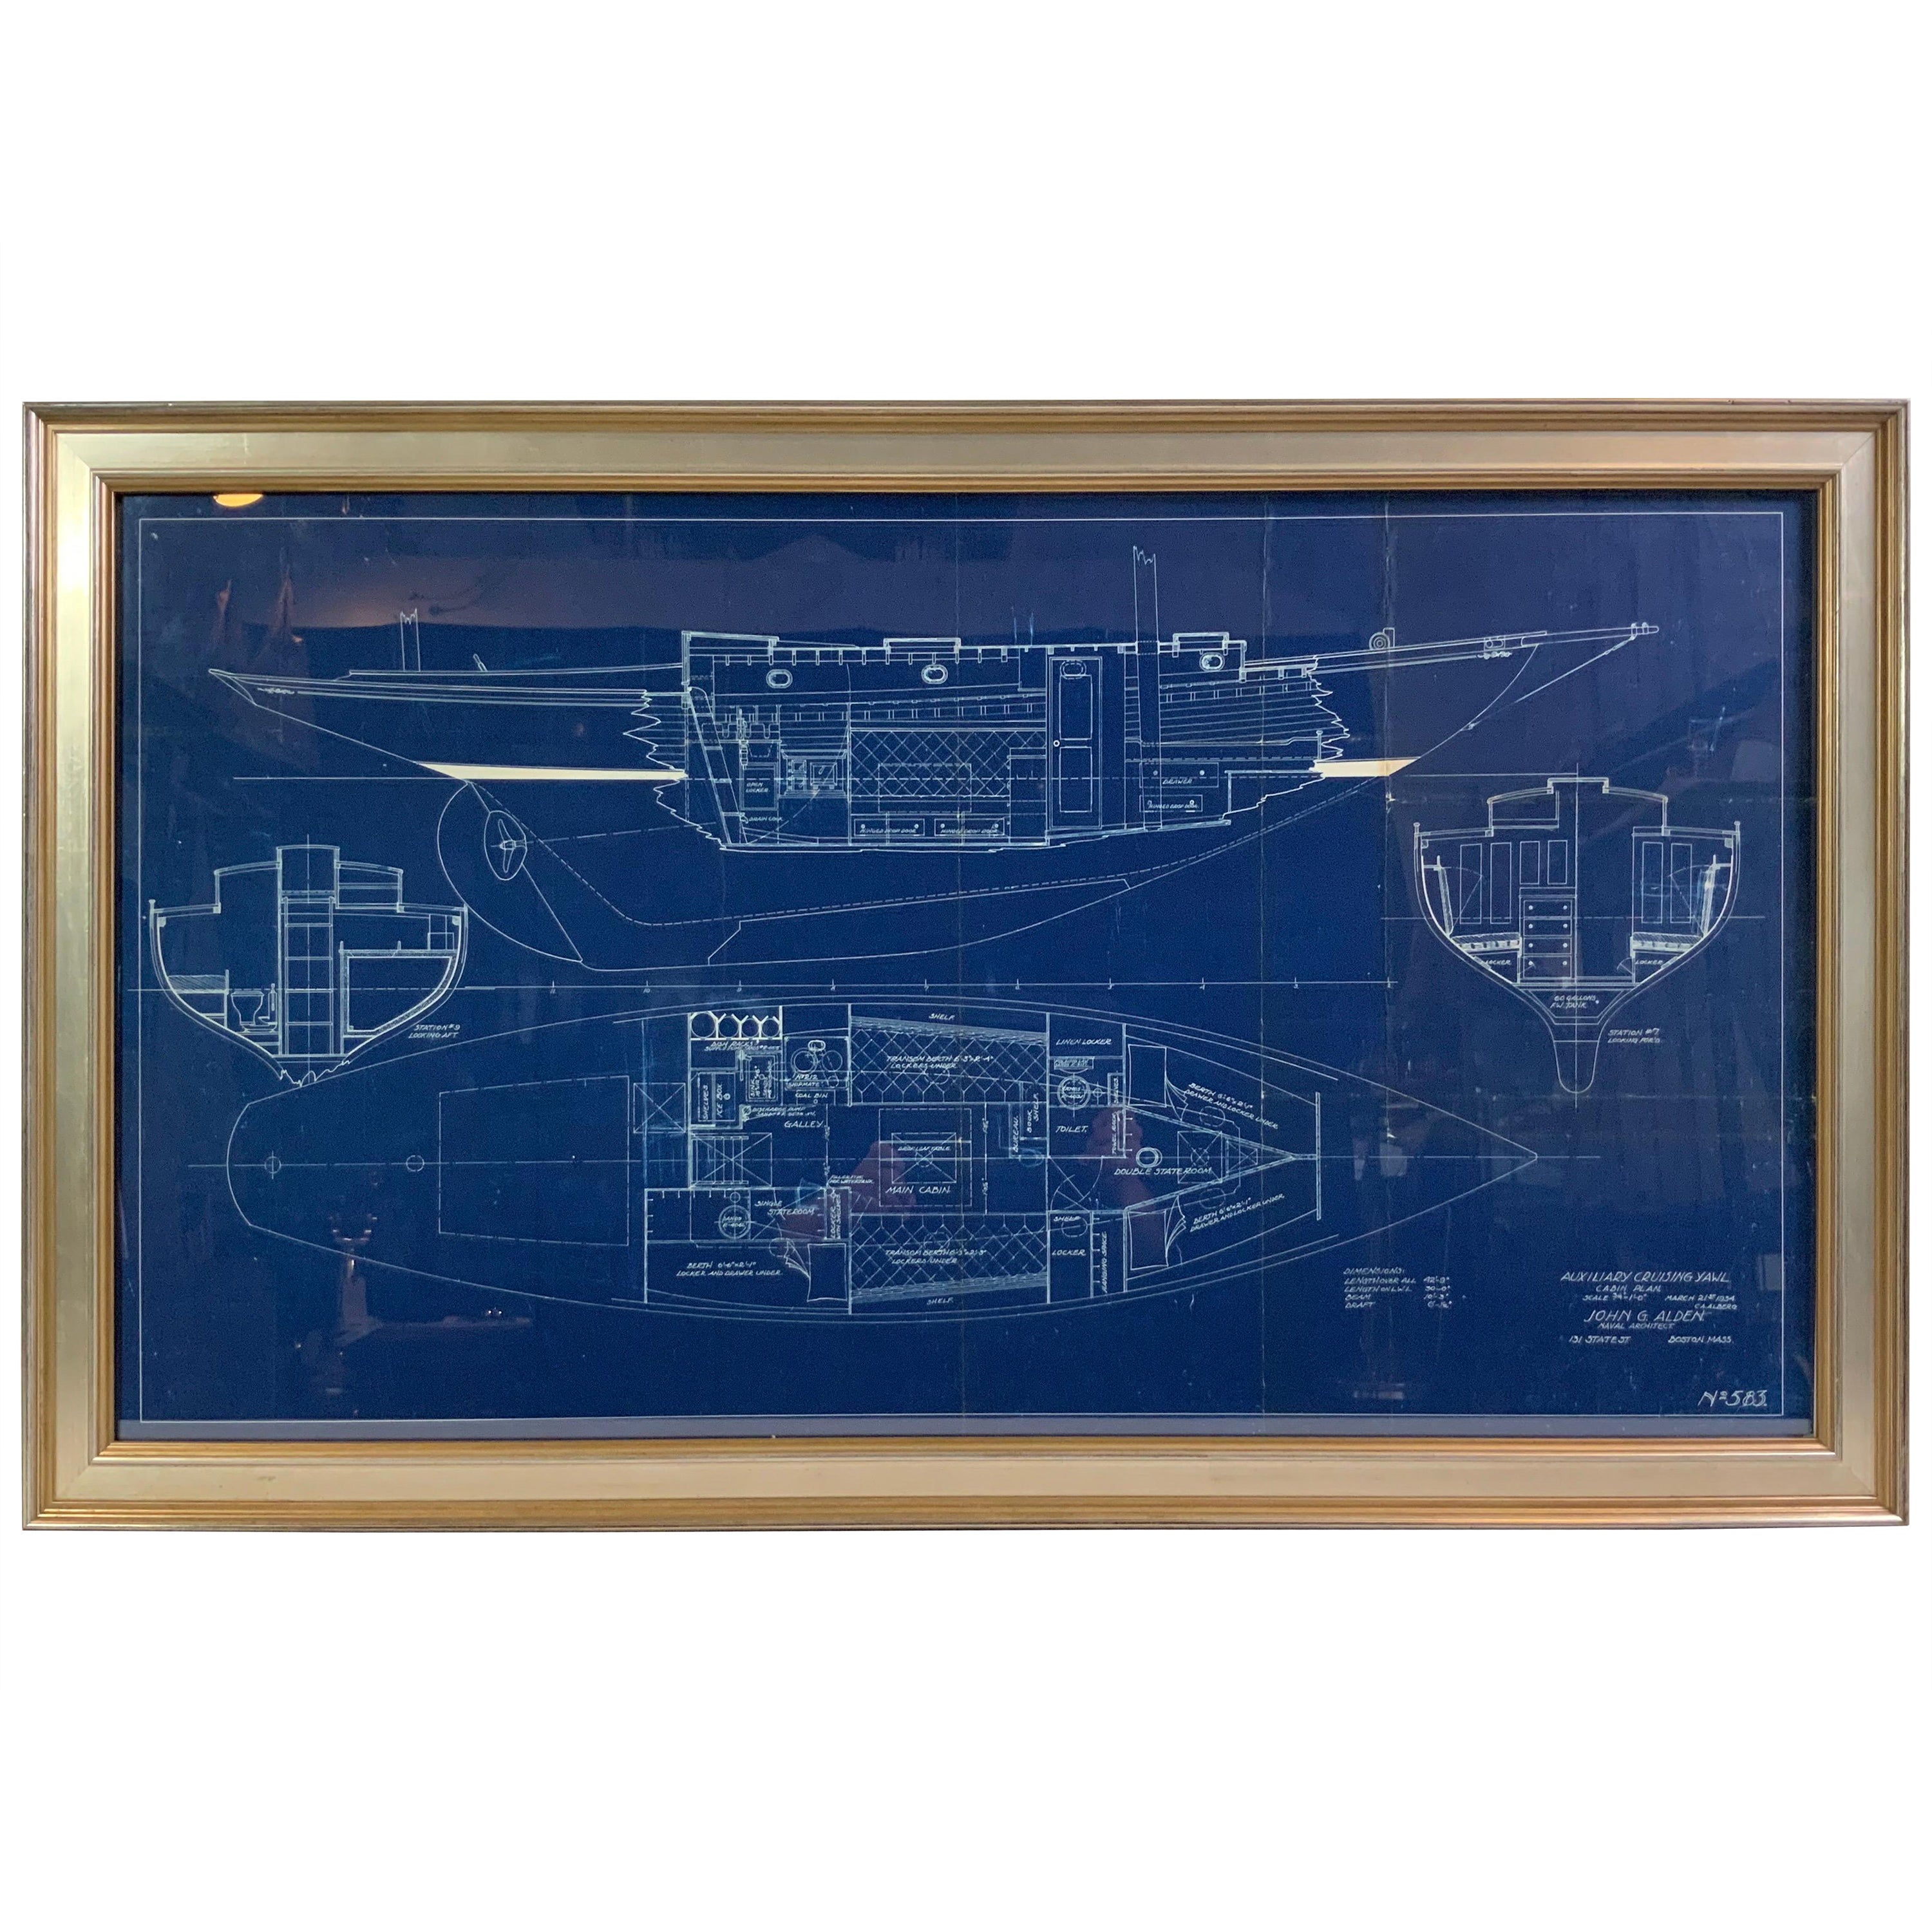 John Alden Blueprint No. 583 of an Auxiliary Cruising Yawl